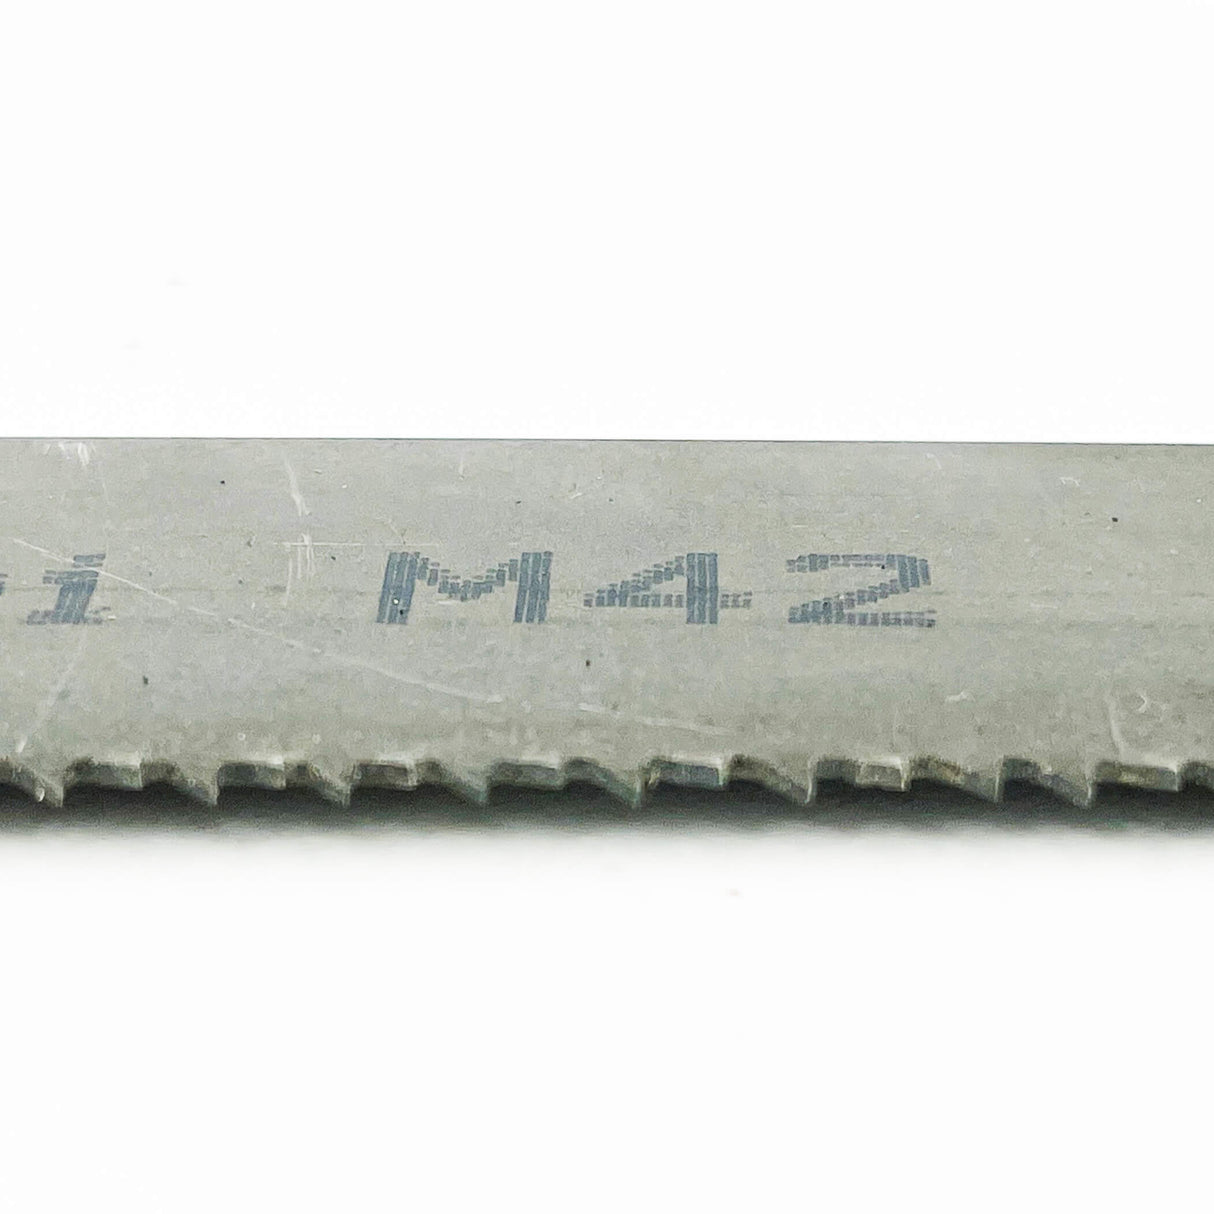 2135mm Long x 20mm Wide COBALT M42 Bi-Metal Band Saw - Pack of 2 Blades